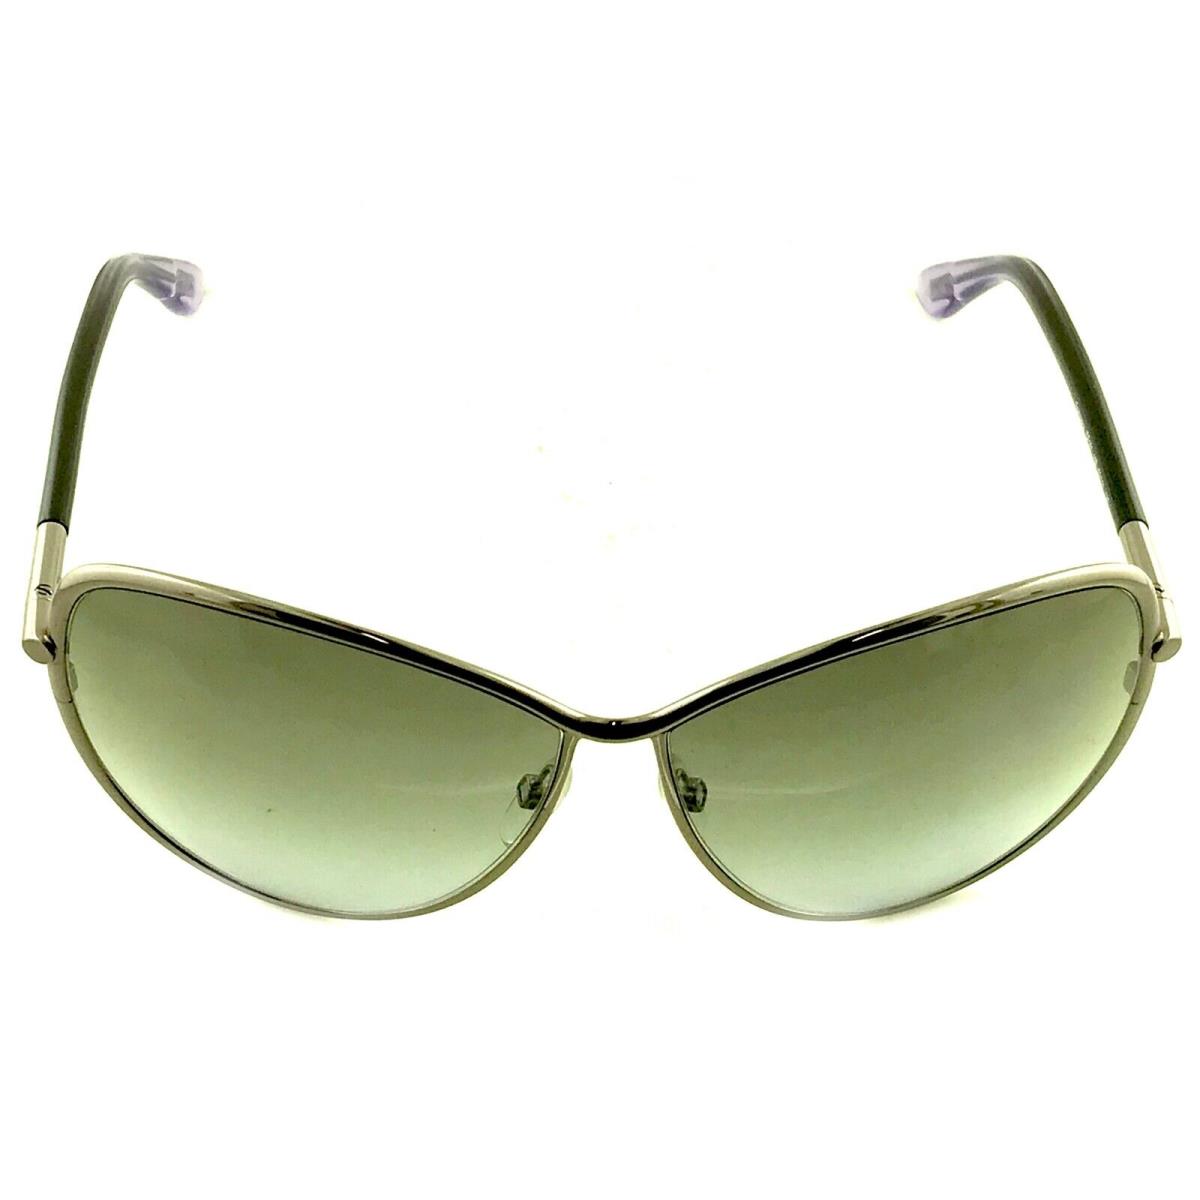 Tom Ford Francesca tf181 10B 63-11-130 Fashion Designer Sunglasses - Multicolor Frame, Green Lens